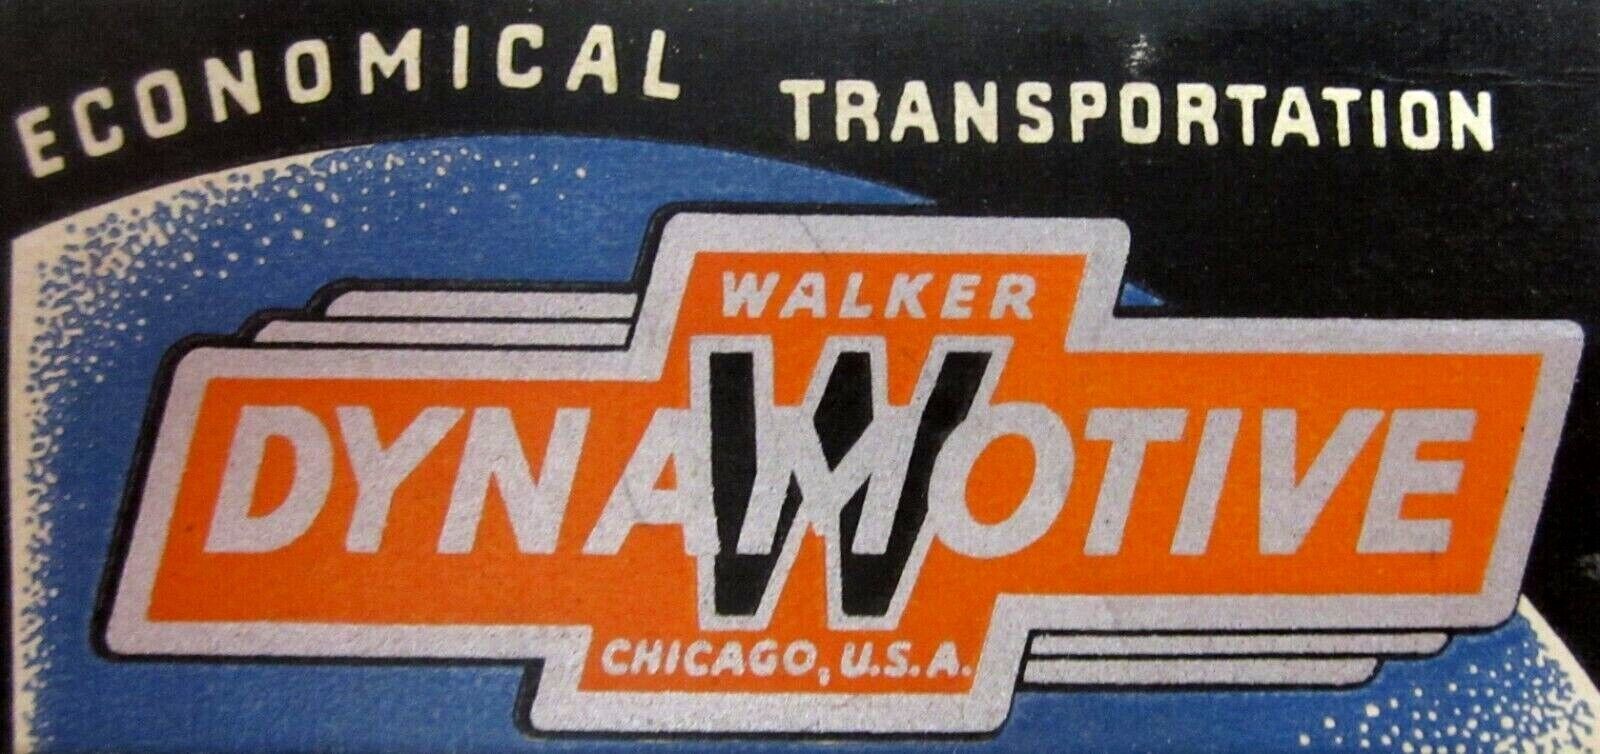 Vintage Walker Dynamotive Delivery Truck Advertising Matchbook Chicago IL 1930s